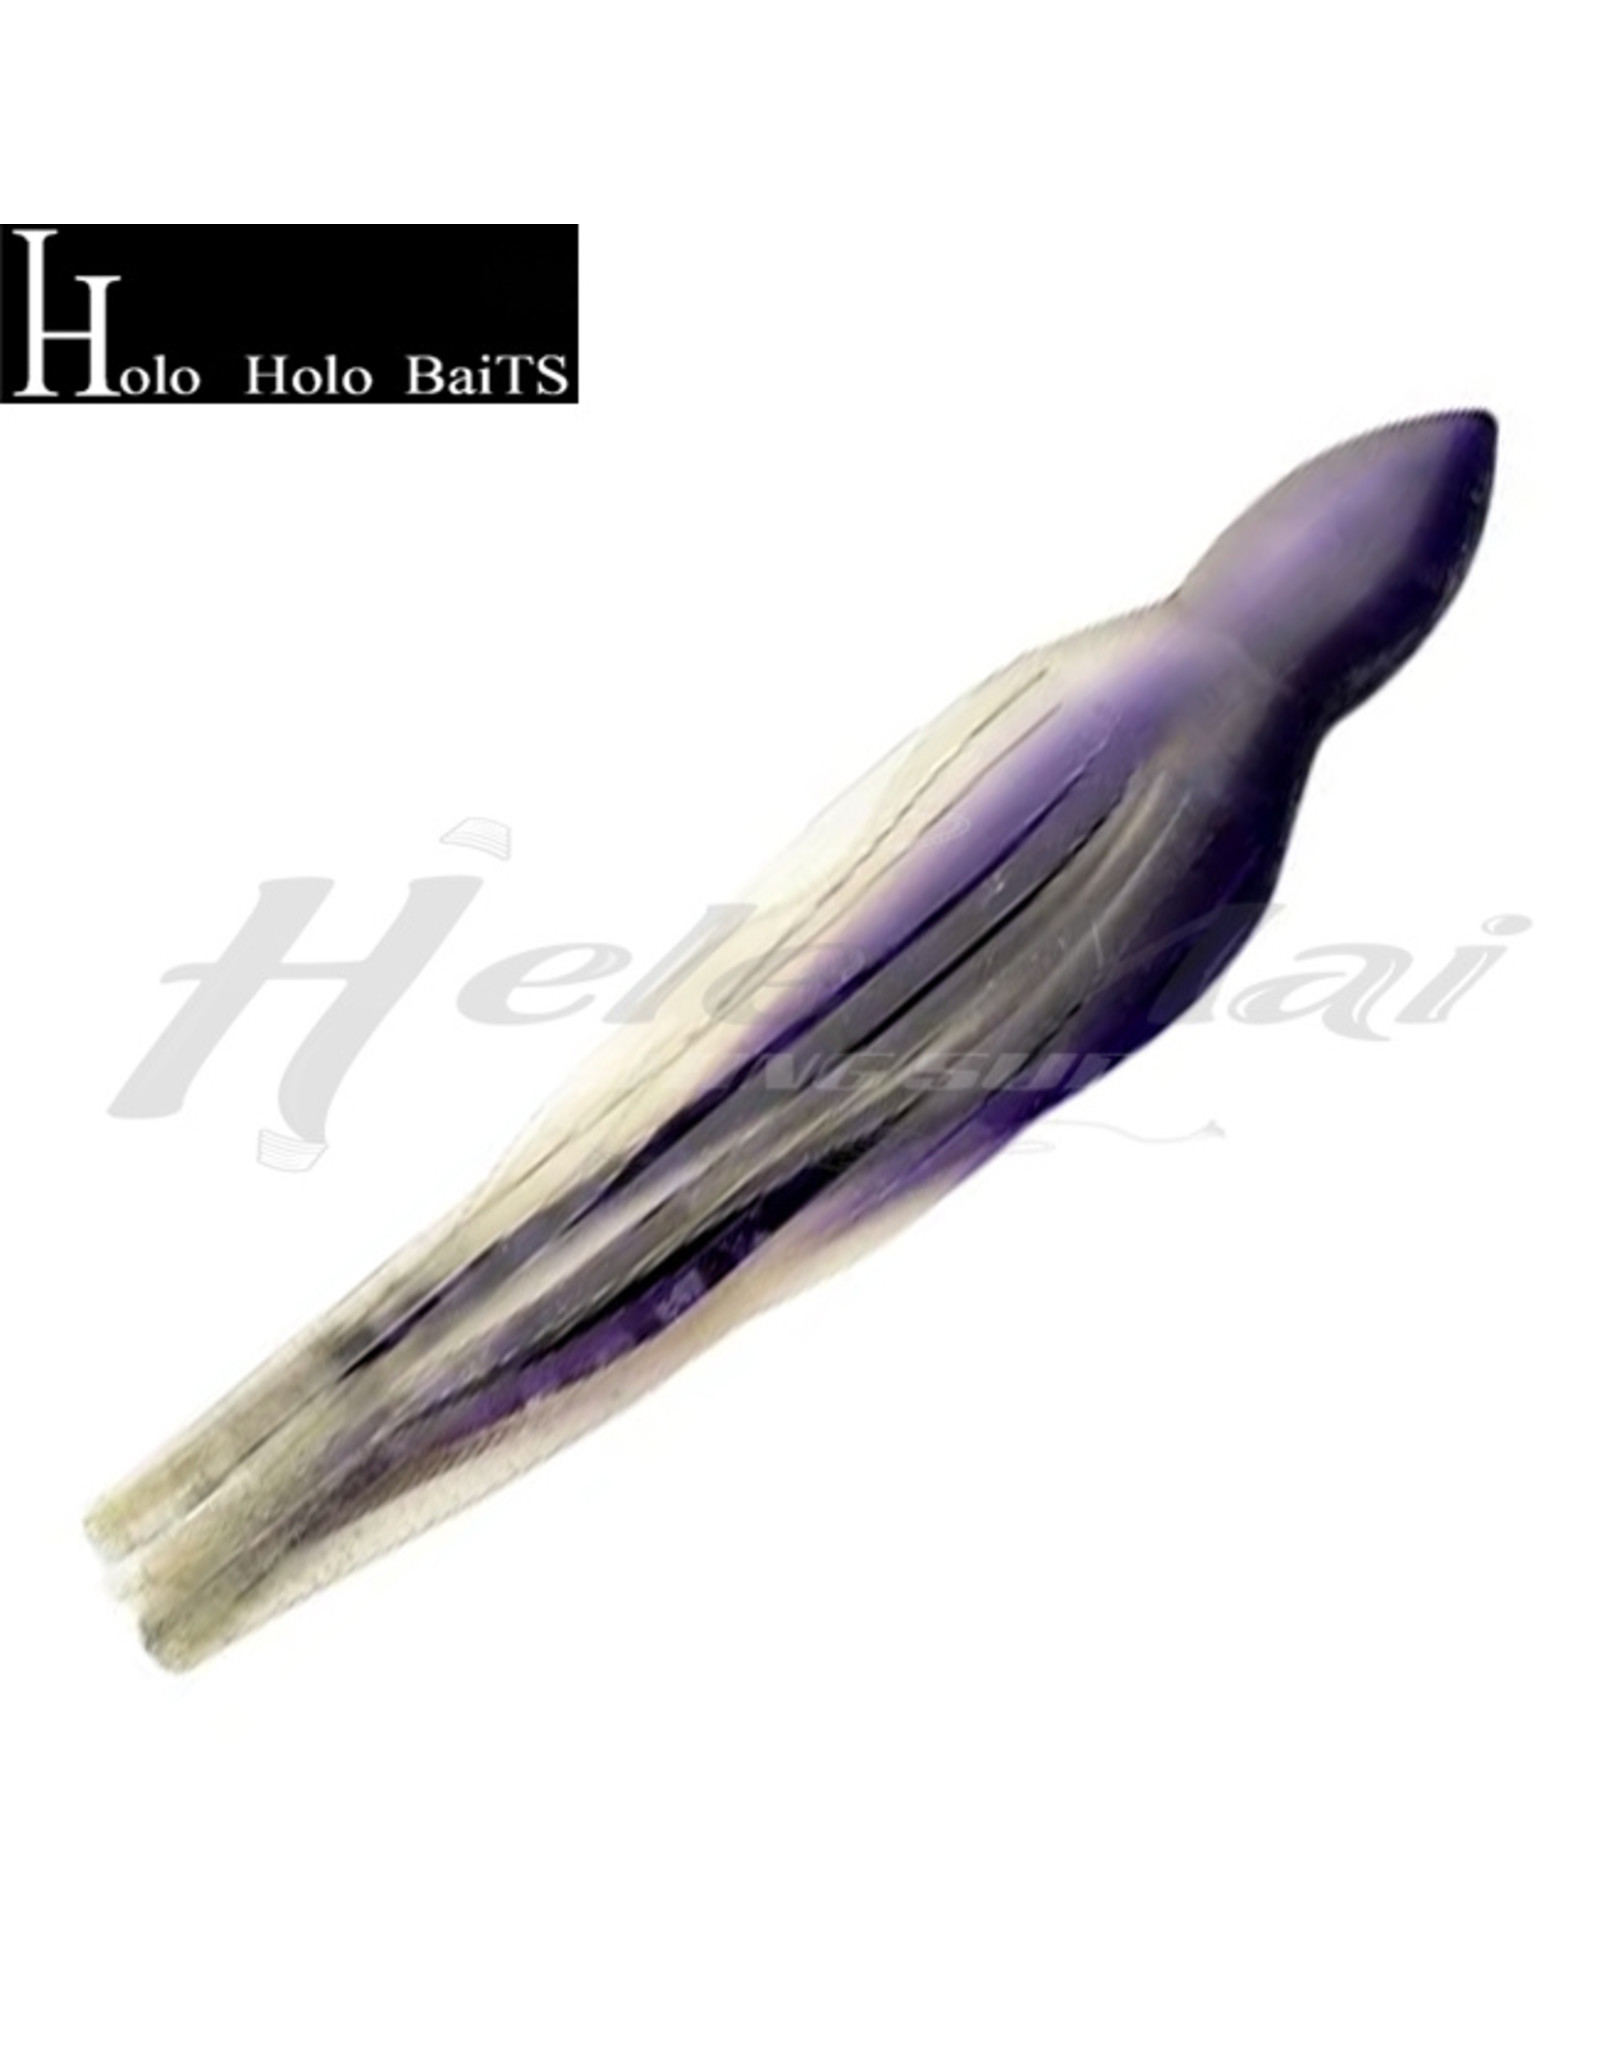 HOLO HOLO HAWAII (HHH) HH, 7" SQUID SKIRT MILKY BLACK PURPLE 0799